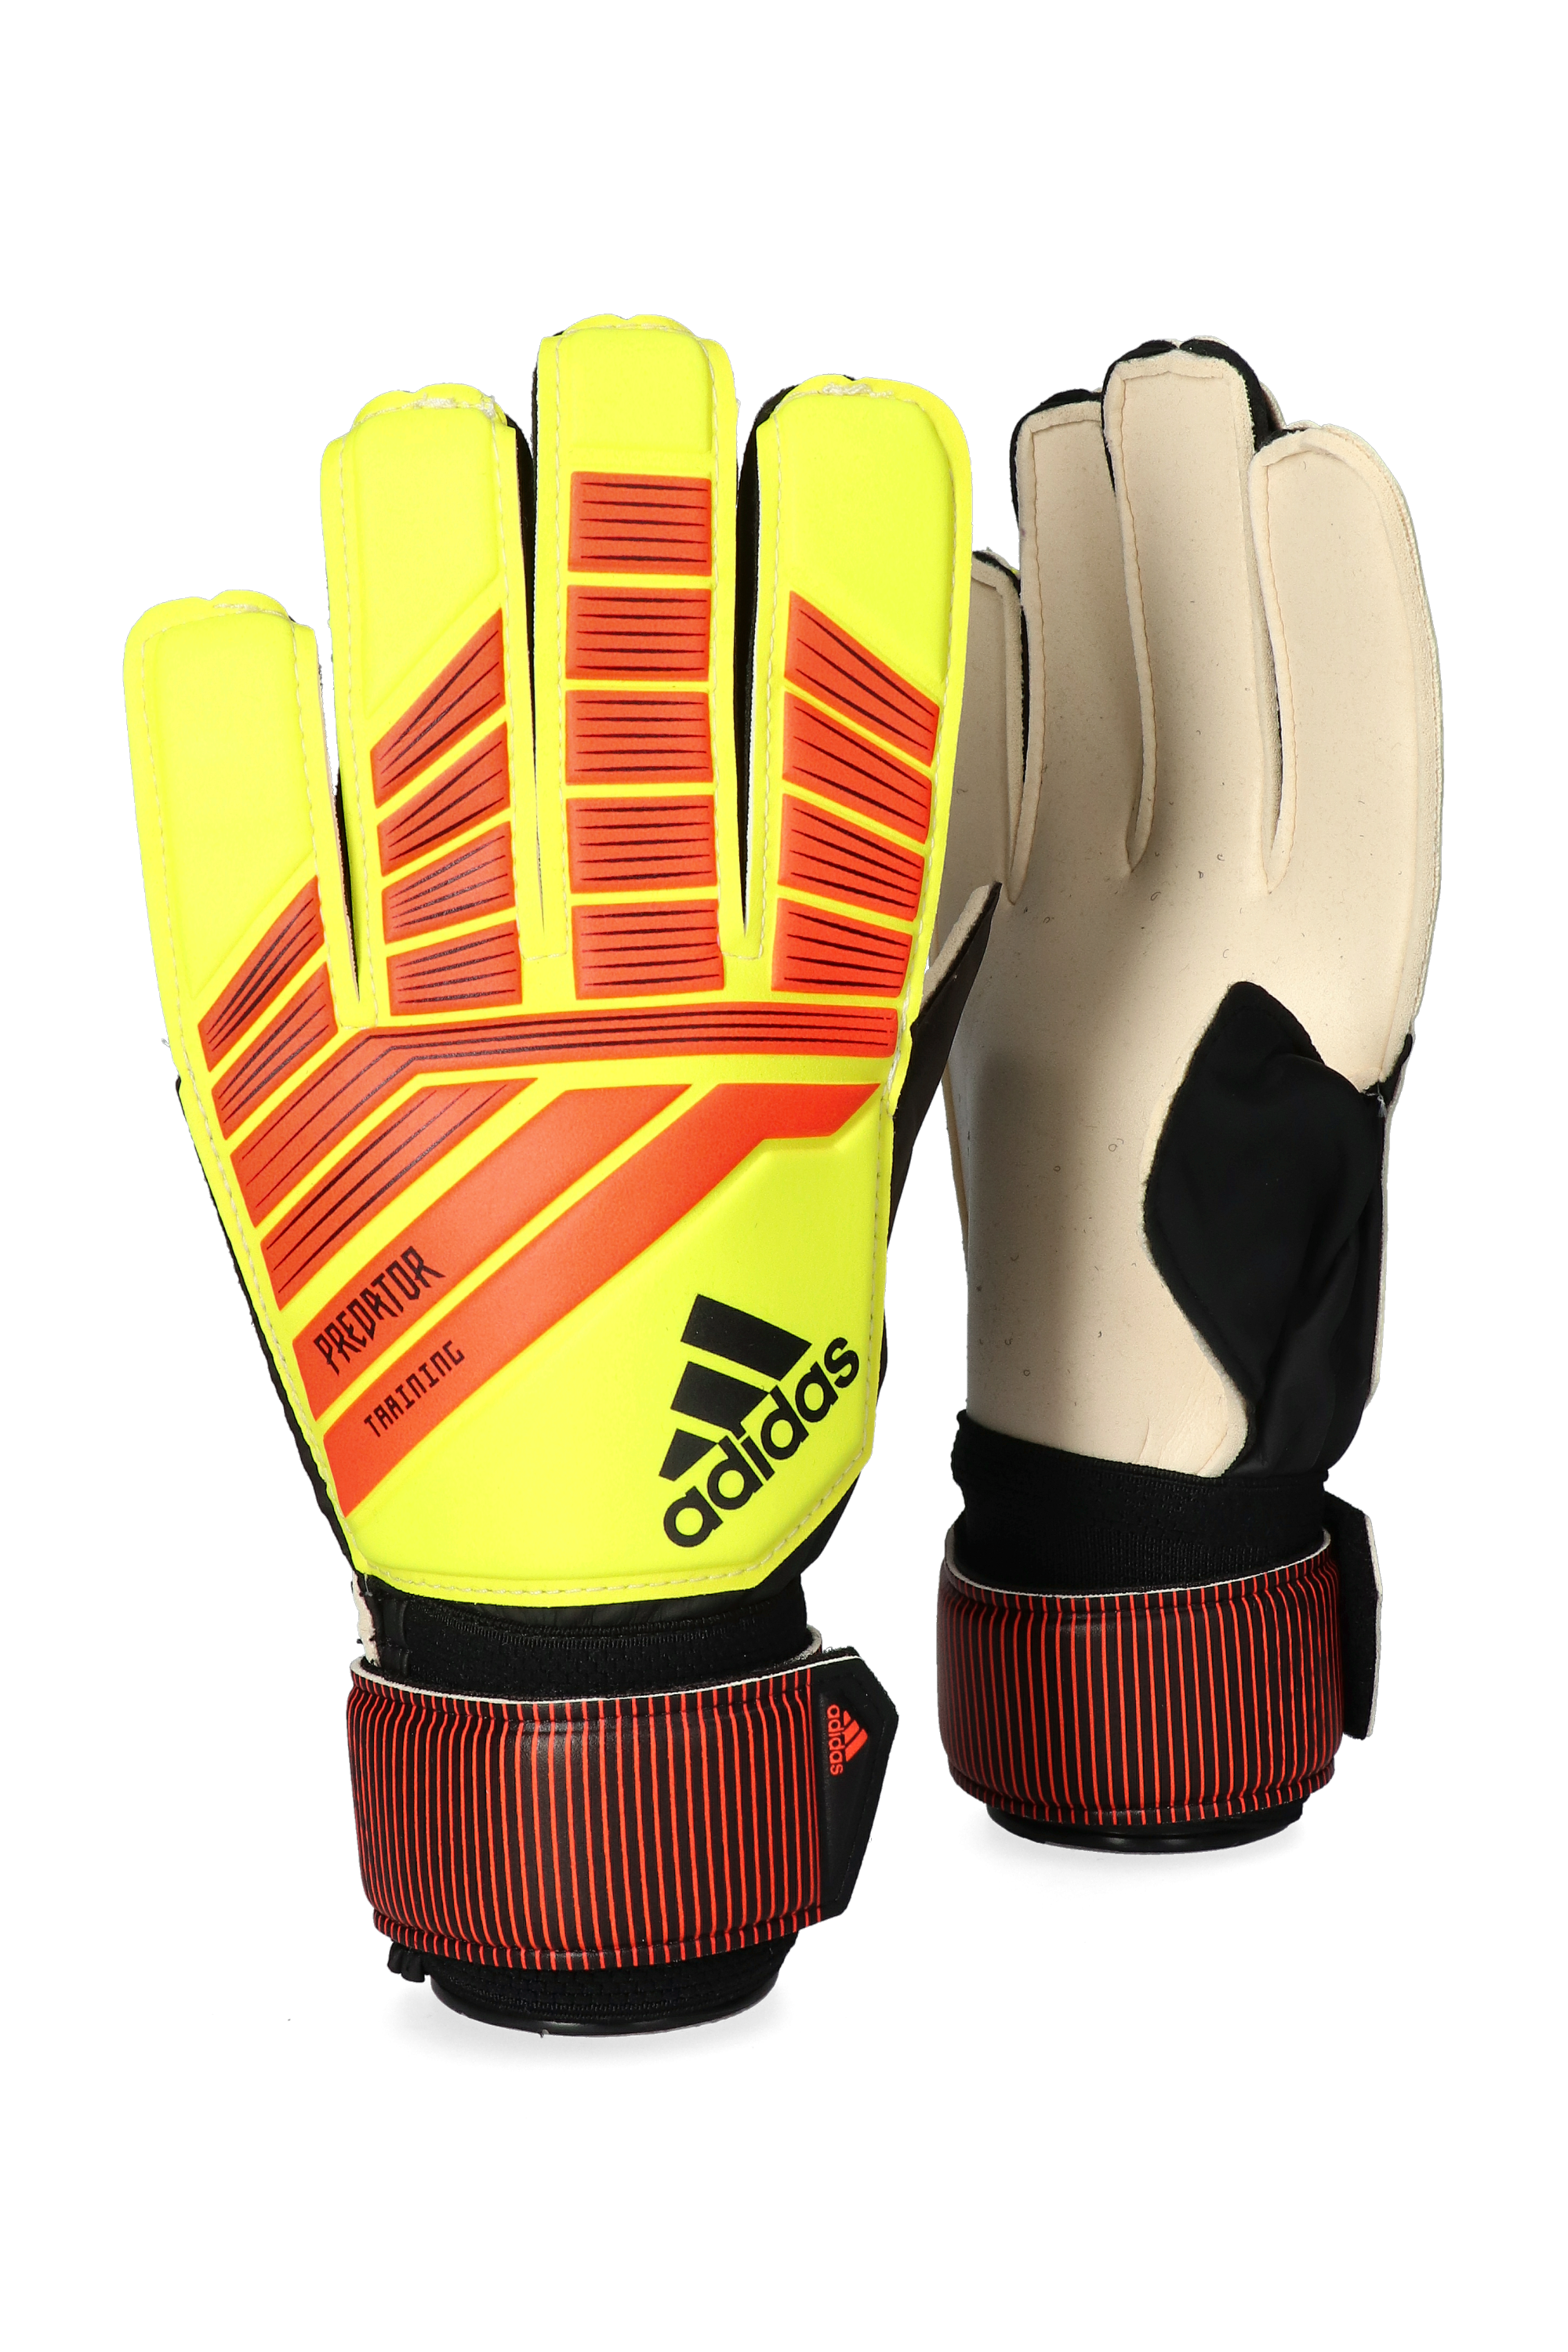 adidas predator training gloves